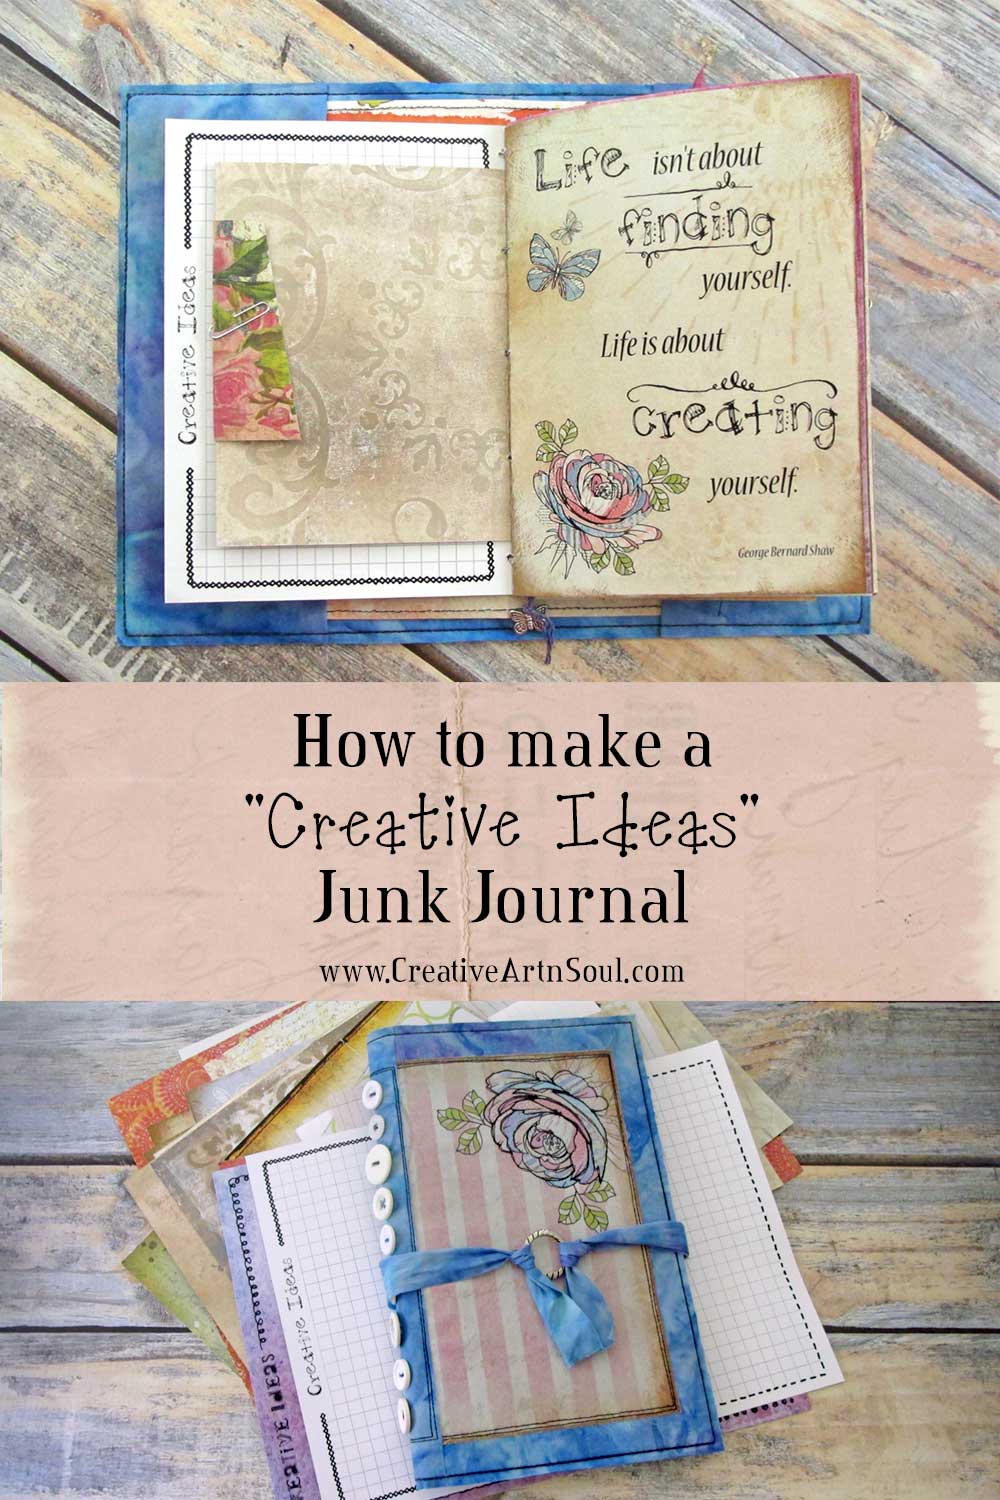 How to Make a Creative Ideas Junk Journal > Creative ArtnSoul